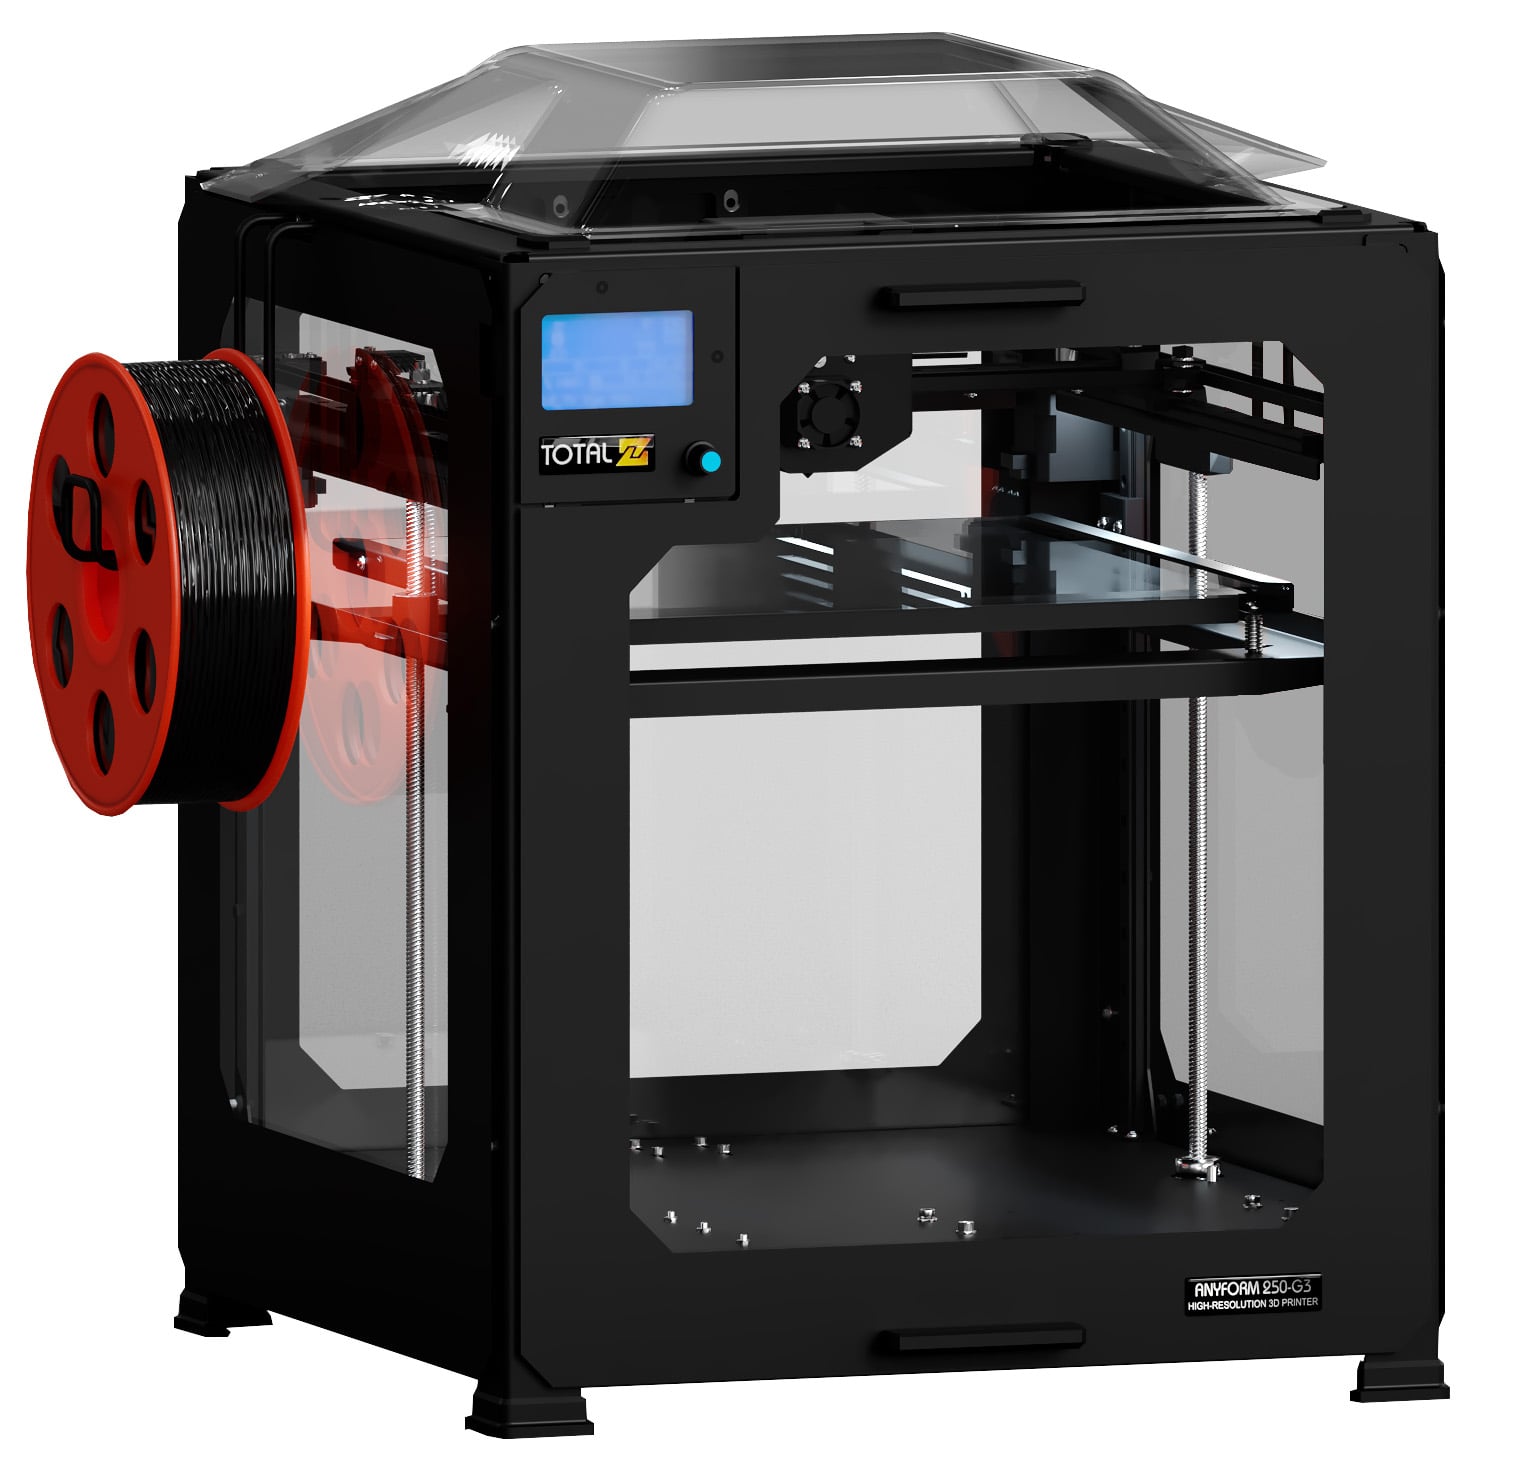 Фото 3D принтер TOTAL Z ANYFORM 250 G3(2X)